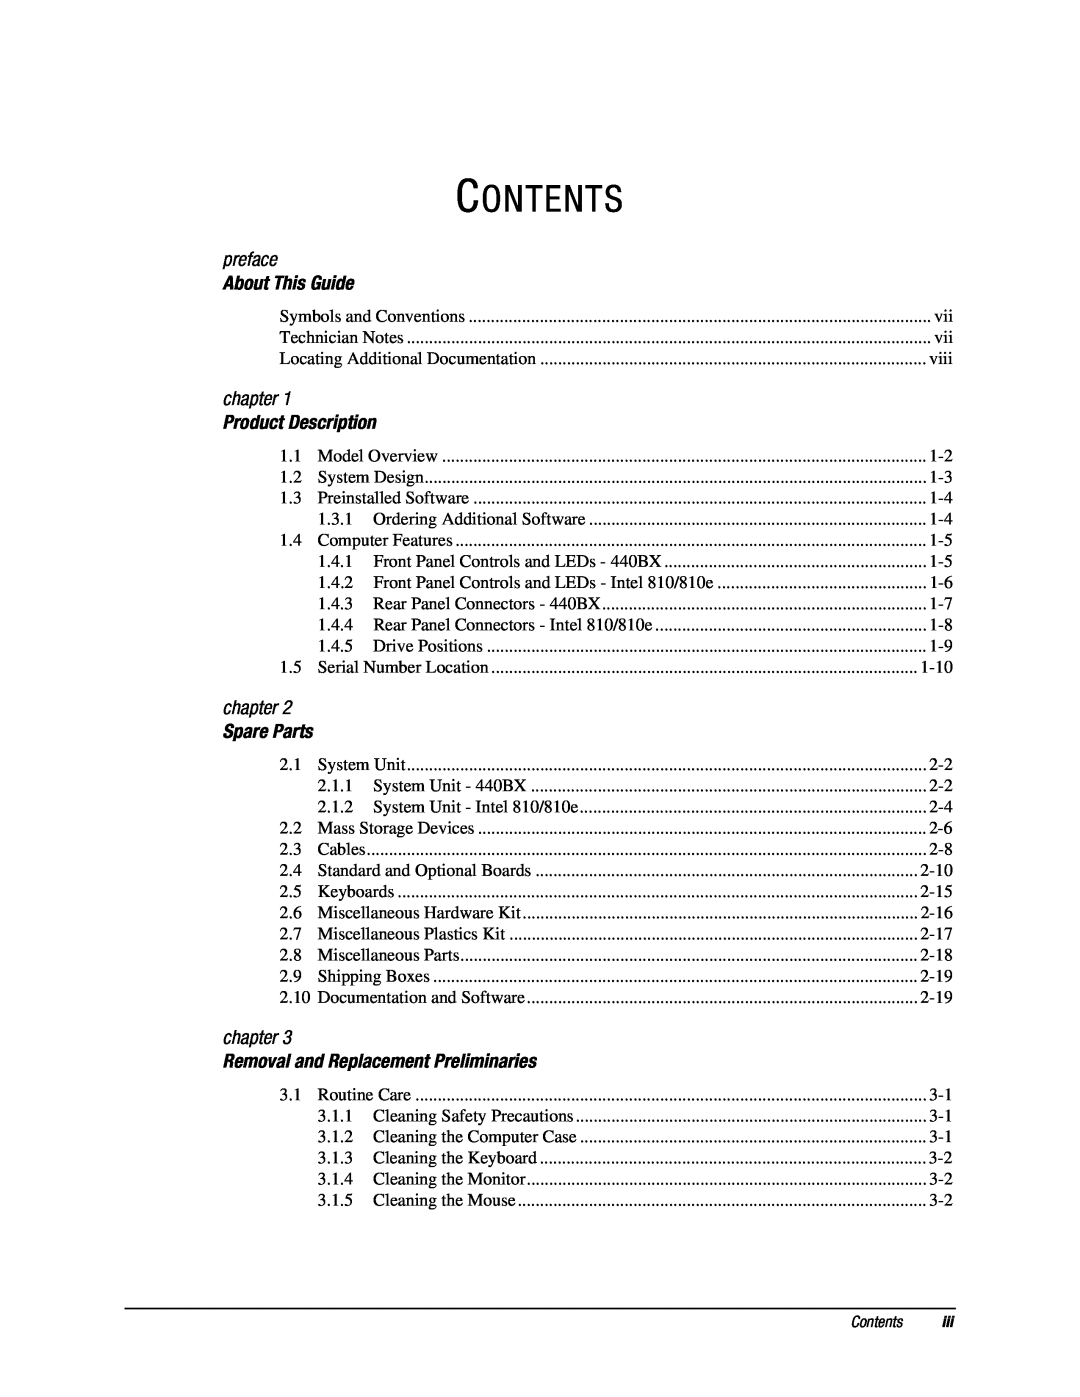 Compaq EP Series manual Contents, preface, About This Guide, chapter, Product Description, Spare Parts 